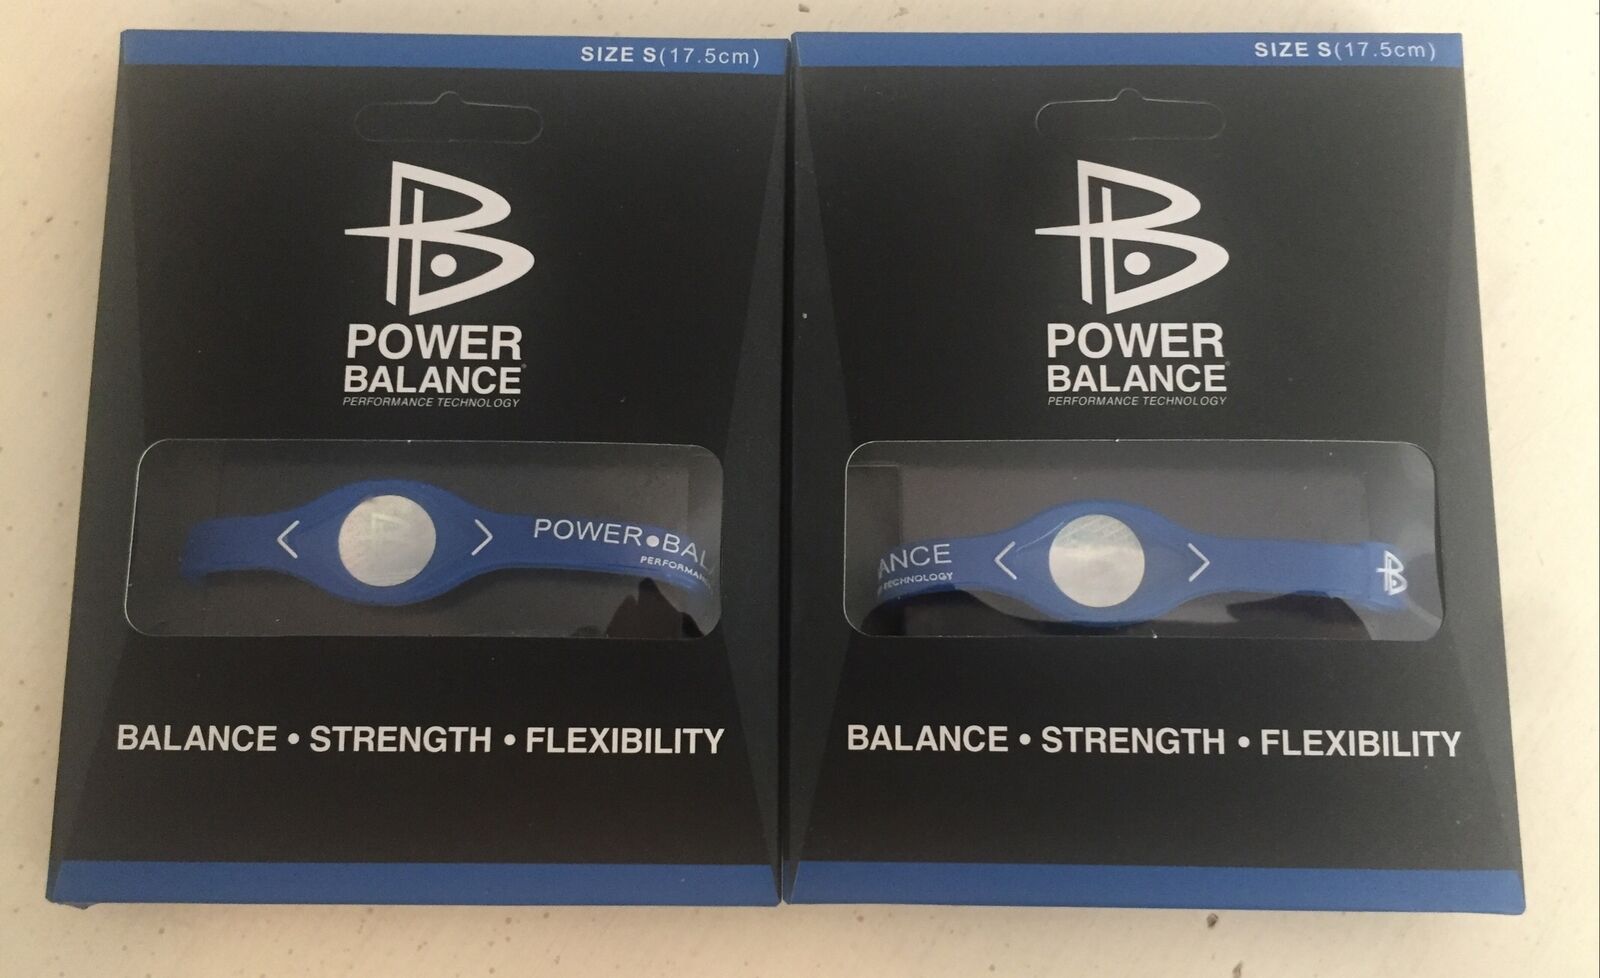 2x Power Balance Bracelet Wrist Size Small BLUE (17.5cm) - NEW Power Balance DO NOT APPLY